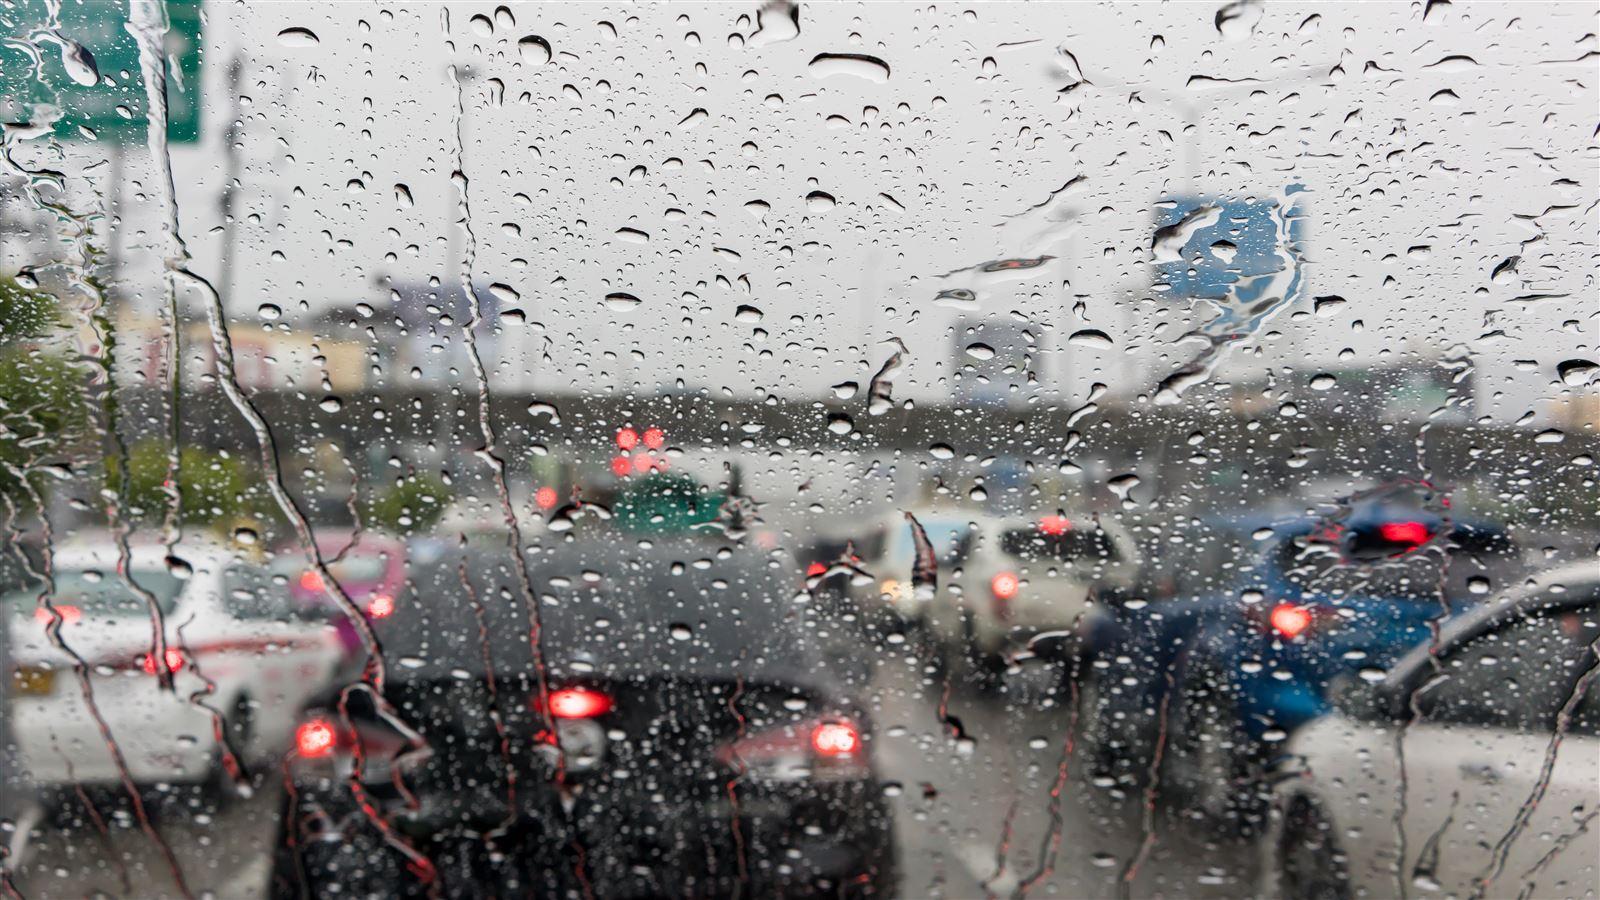 Traffic Jam in the rain